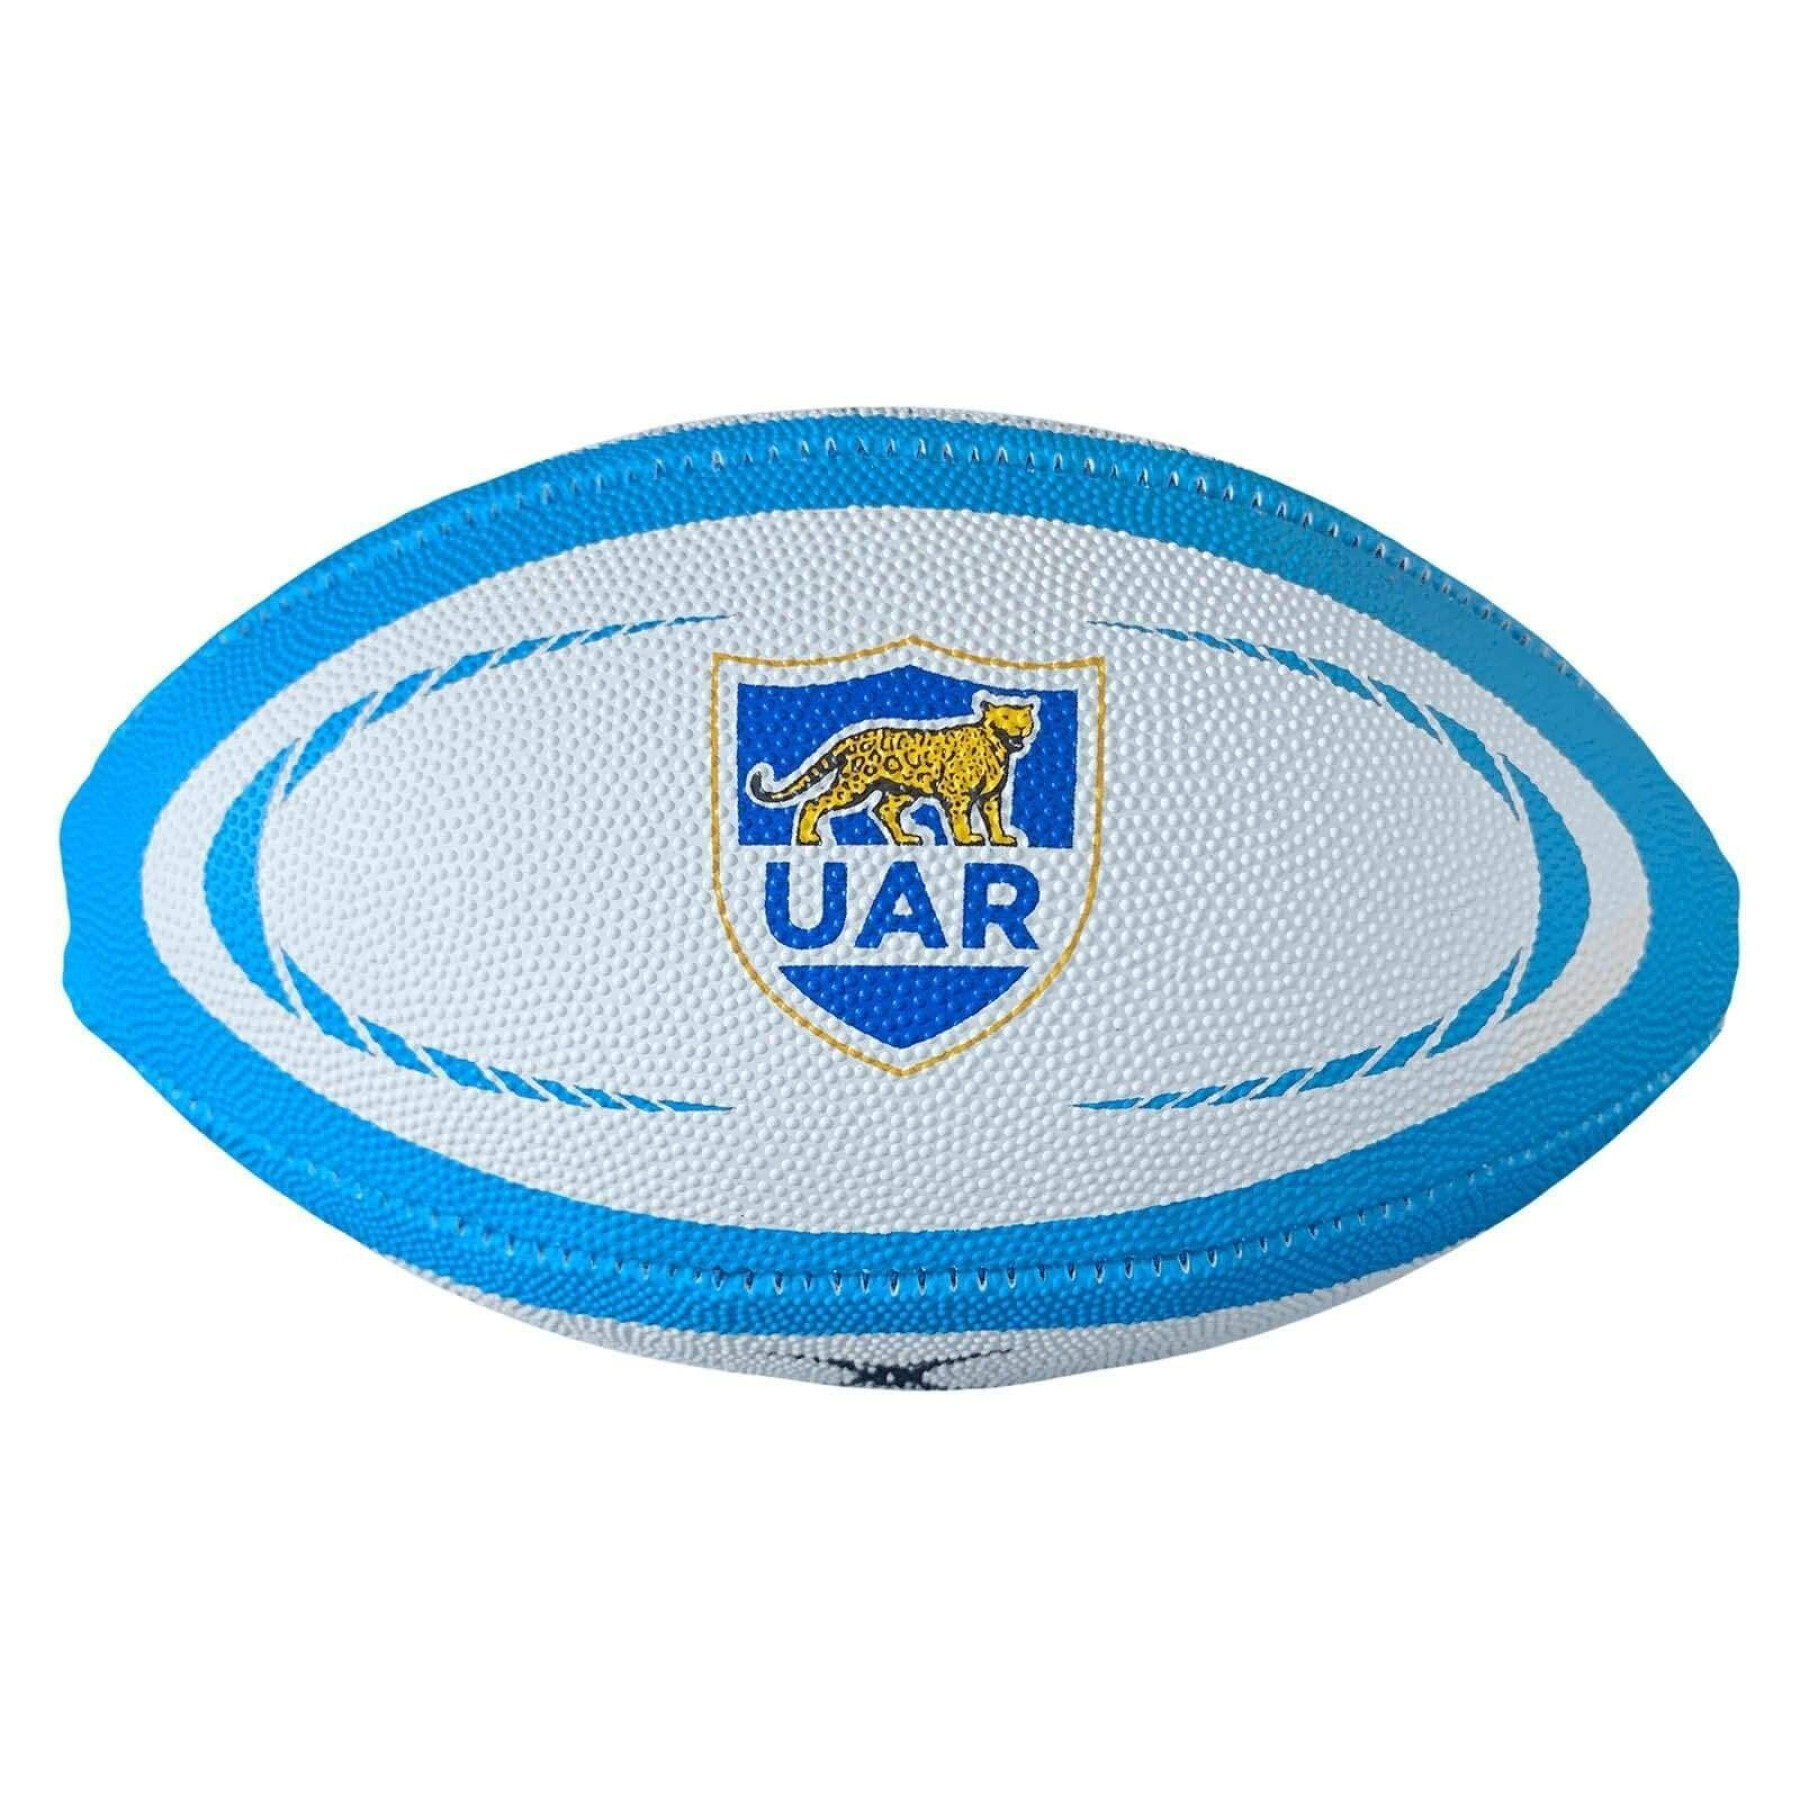 Mini replika rugbyboll Gilbert Argentine (taille 1)